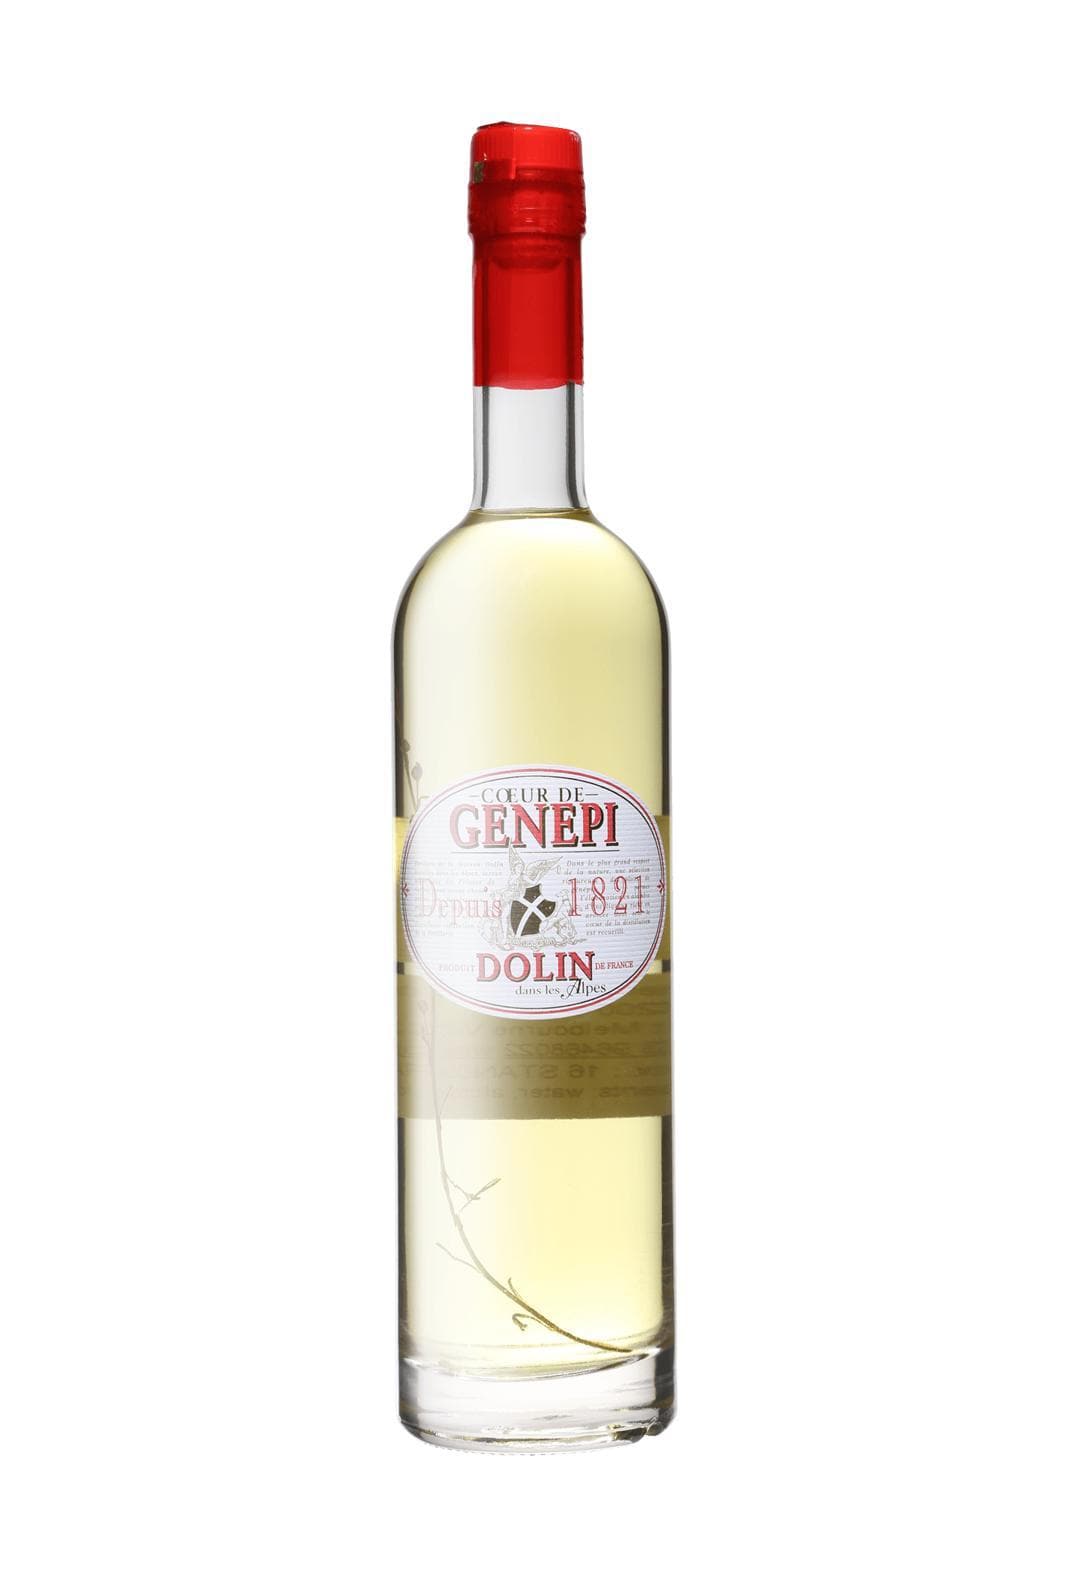 Dolin Liqueur de Genepi (Artemisia Glacii) 40% 500ml | Liquor & Spirits | Shop online at Spirits of France